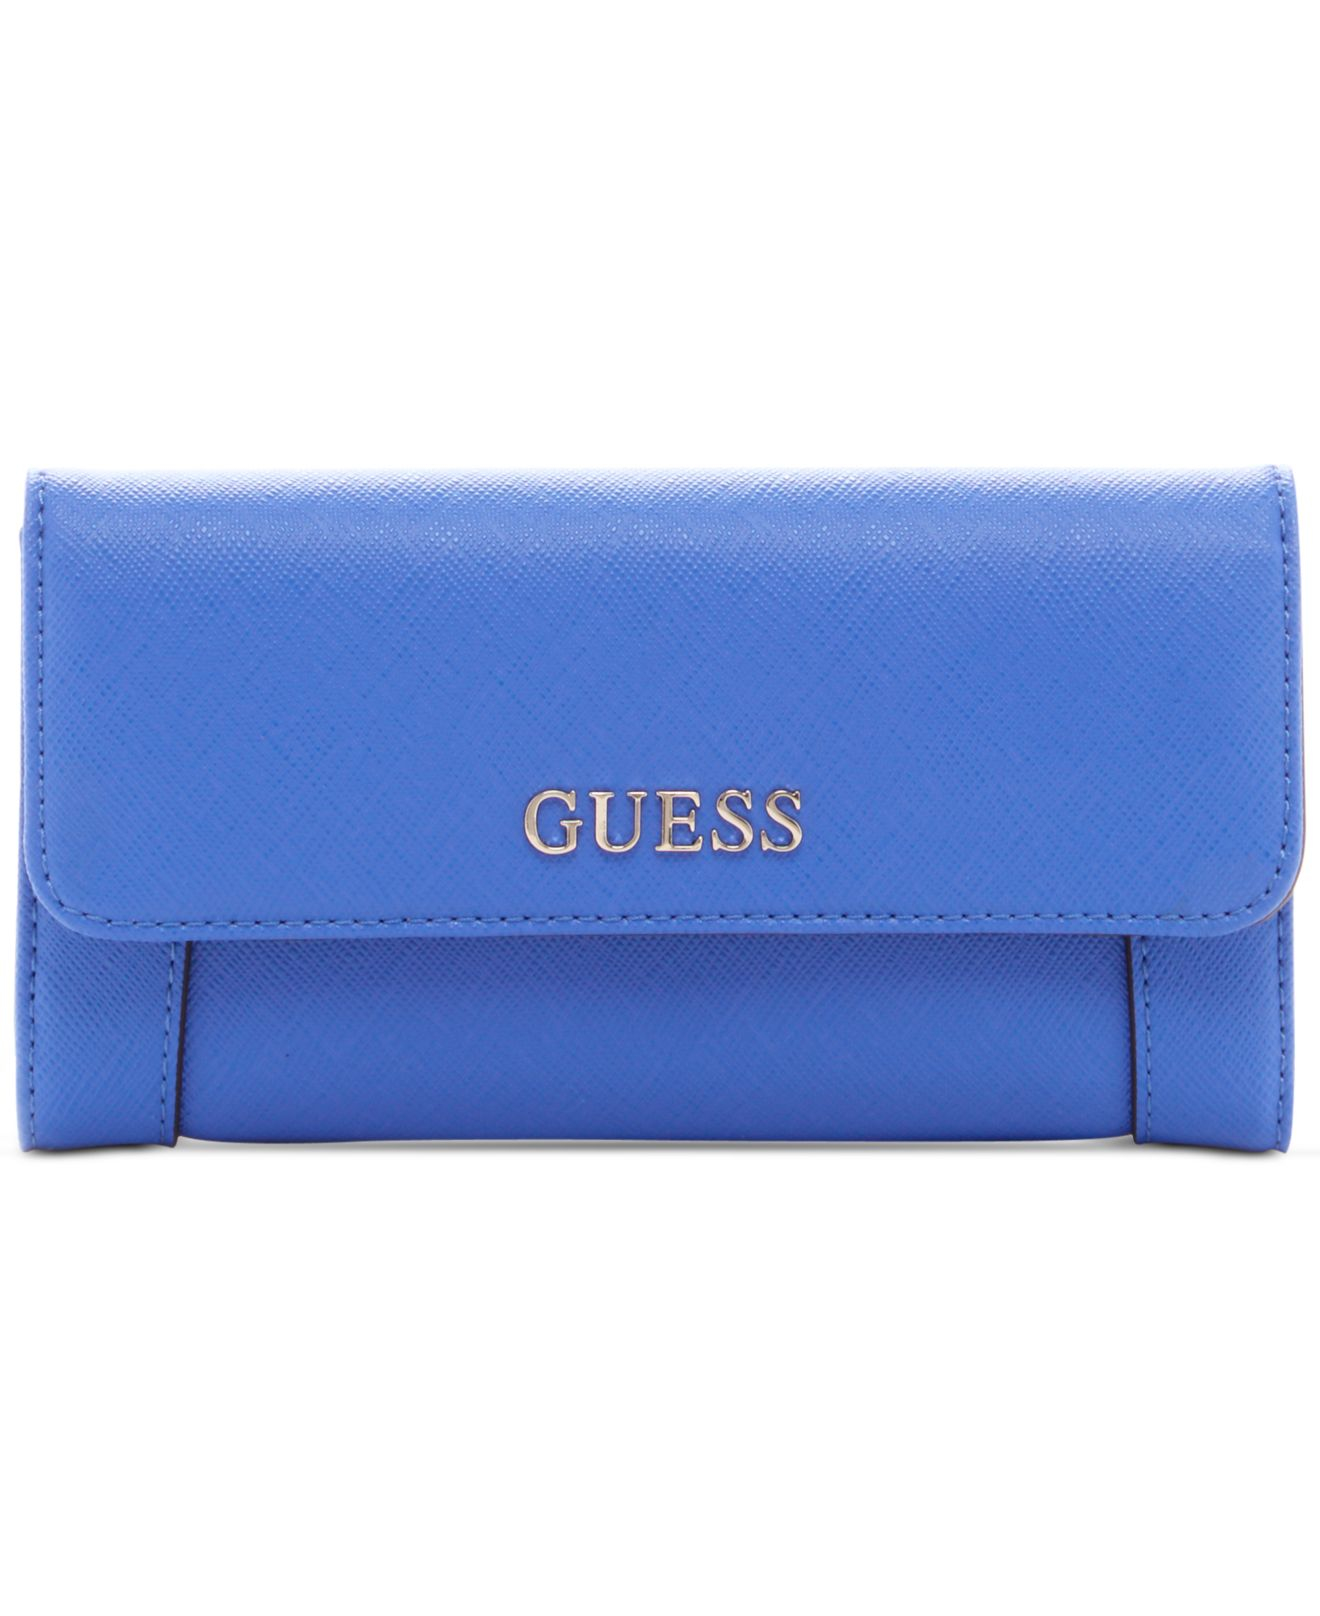 Guess Huntley Slim Clutch Wallet in Periwinkle (Blue) - Lyst